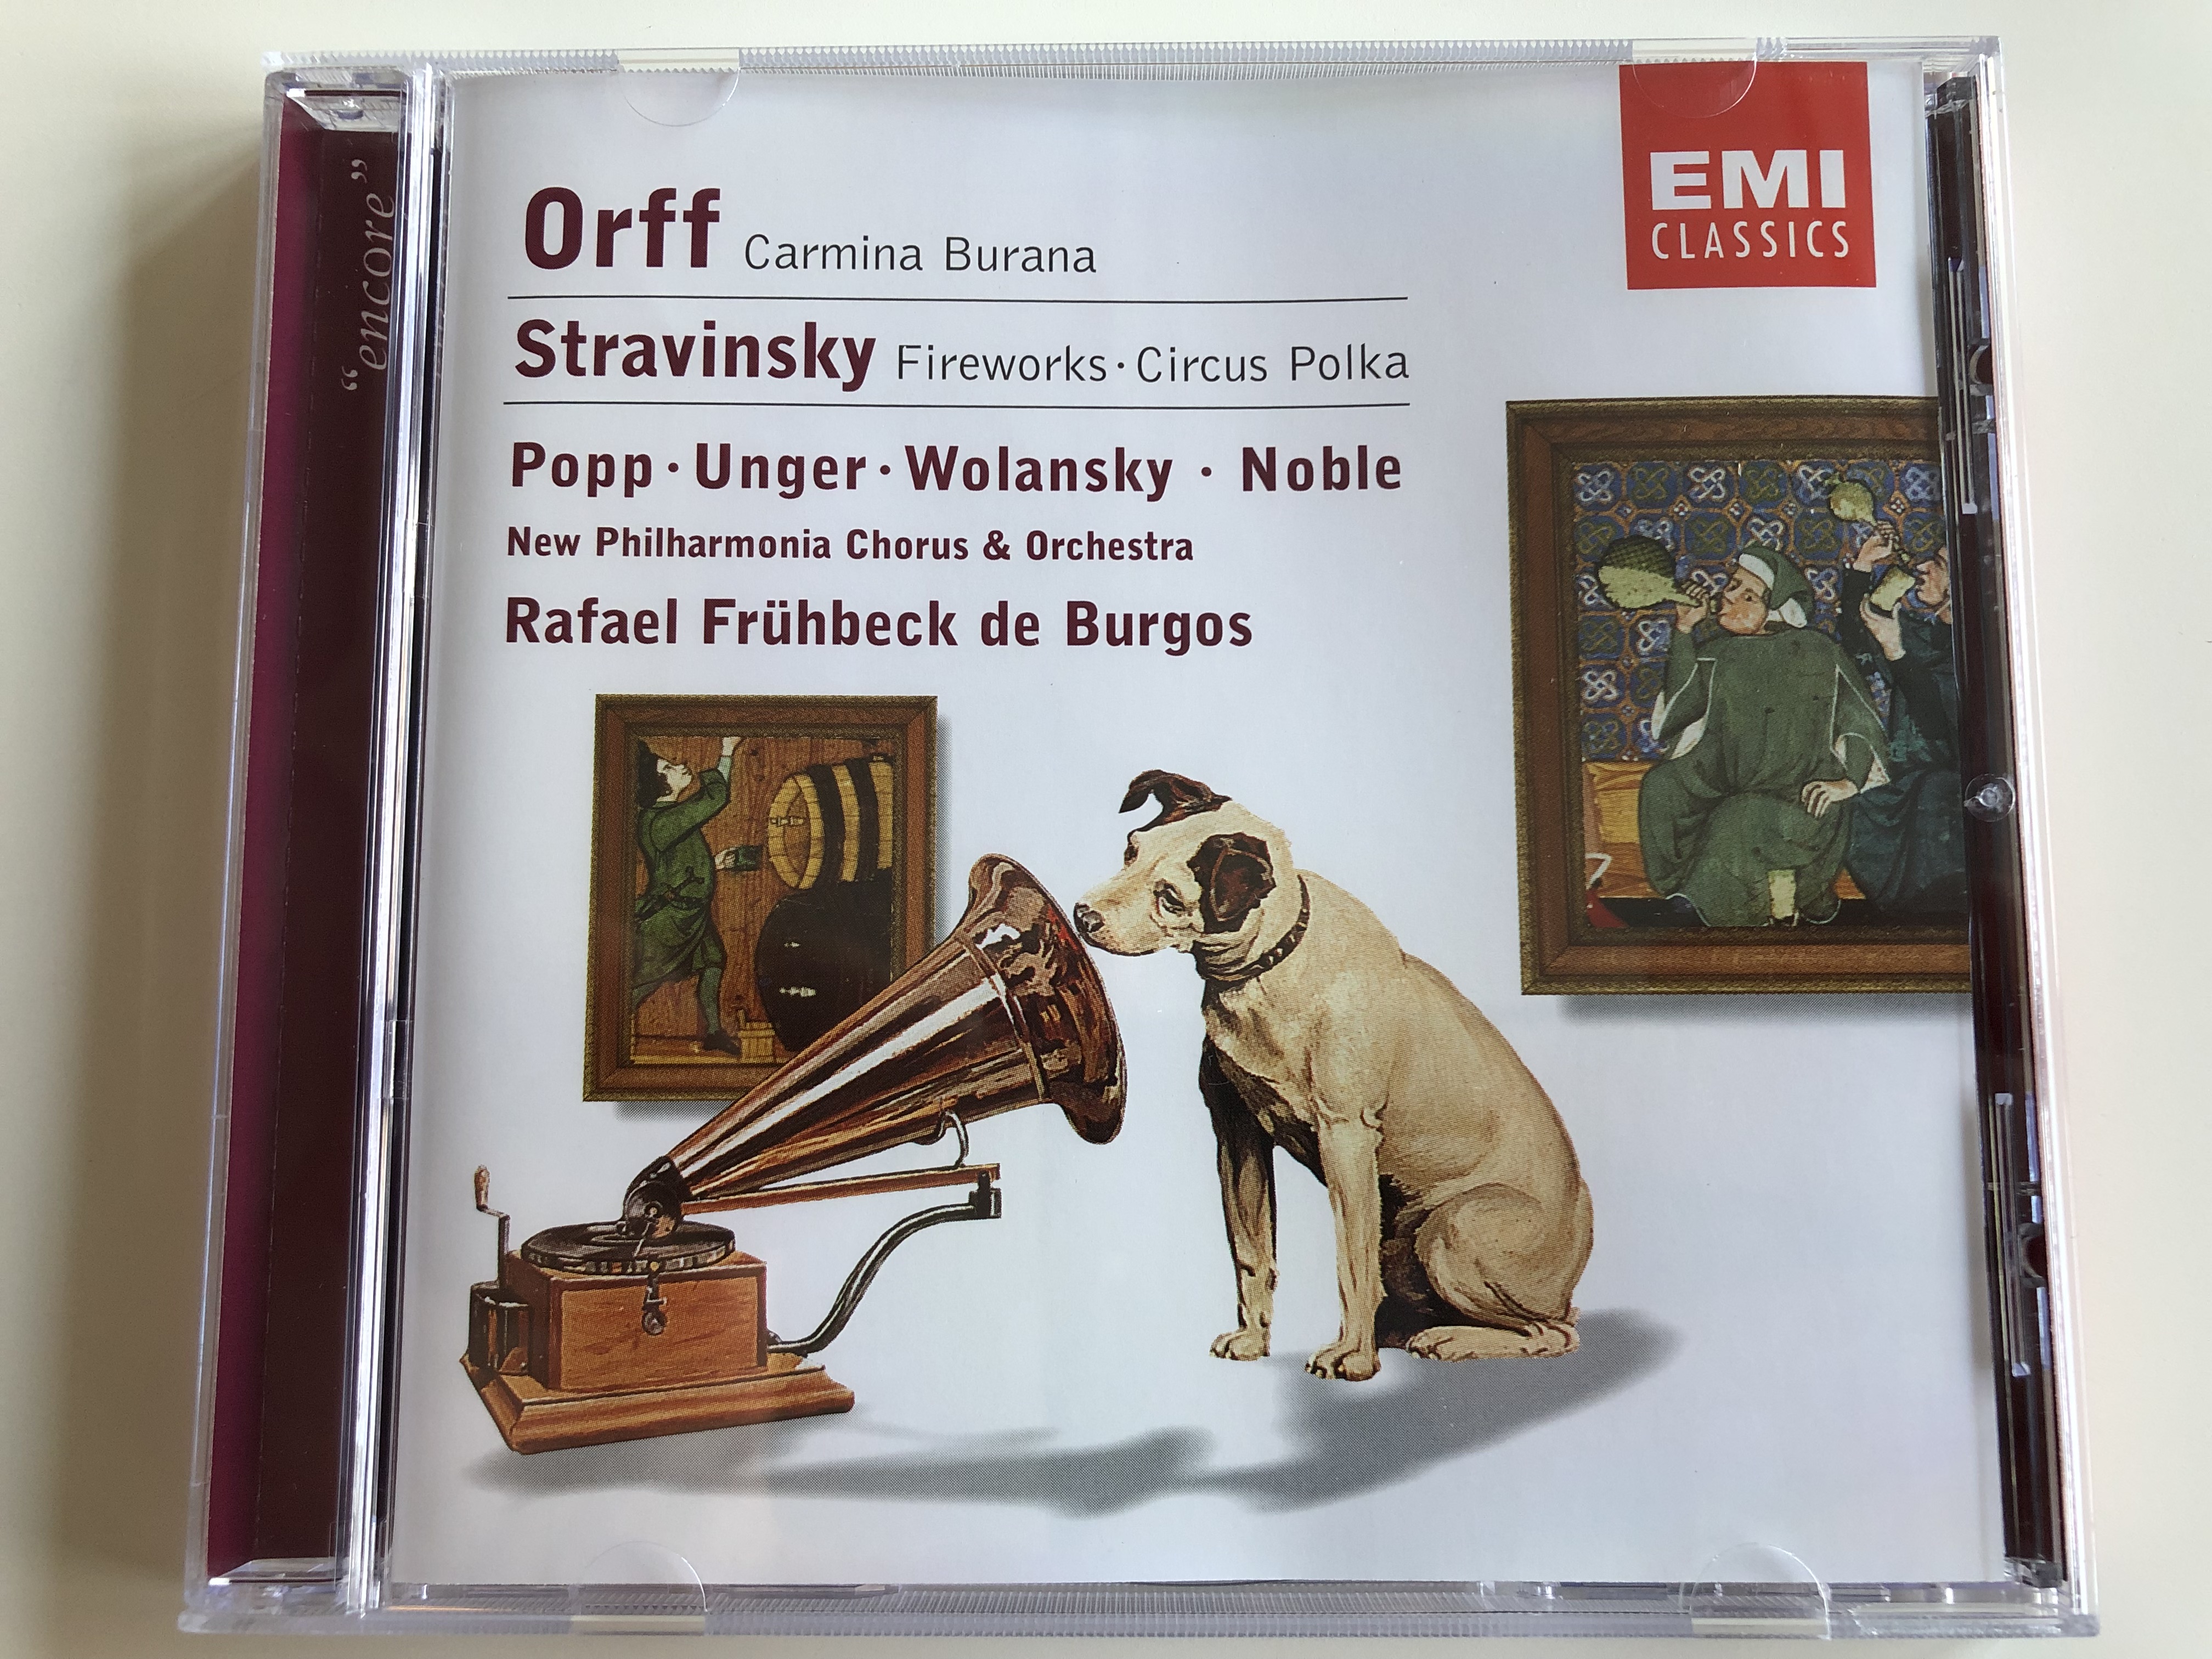 carl-orff-carmina-burana-igor-stravinsky-fireworks-op.-4-circus-polka-audio-cd-2001-emi-classics-724357458221-.jpg